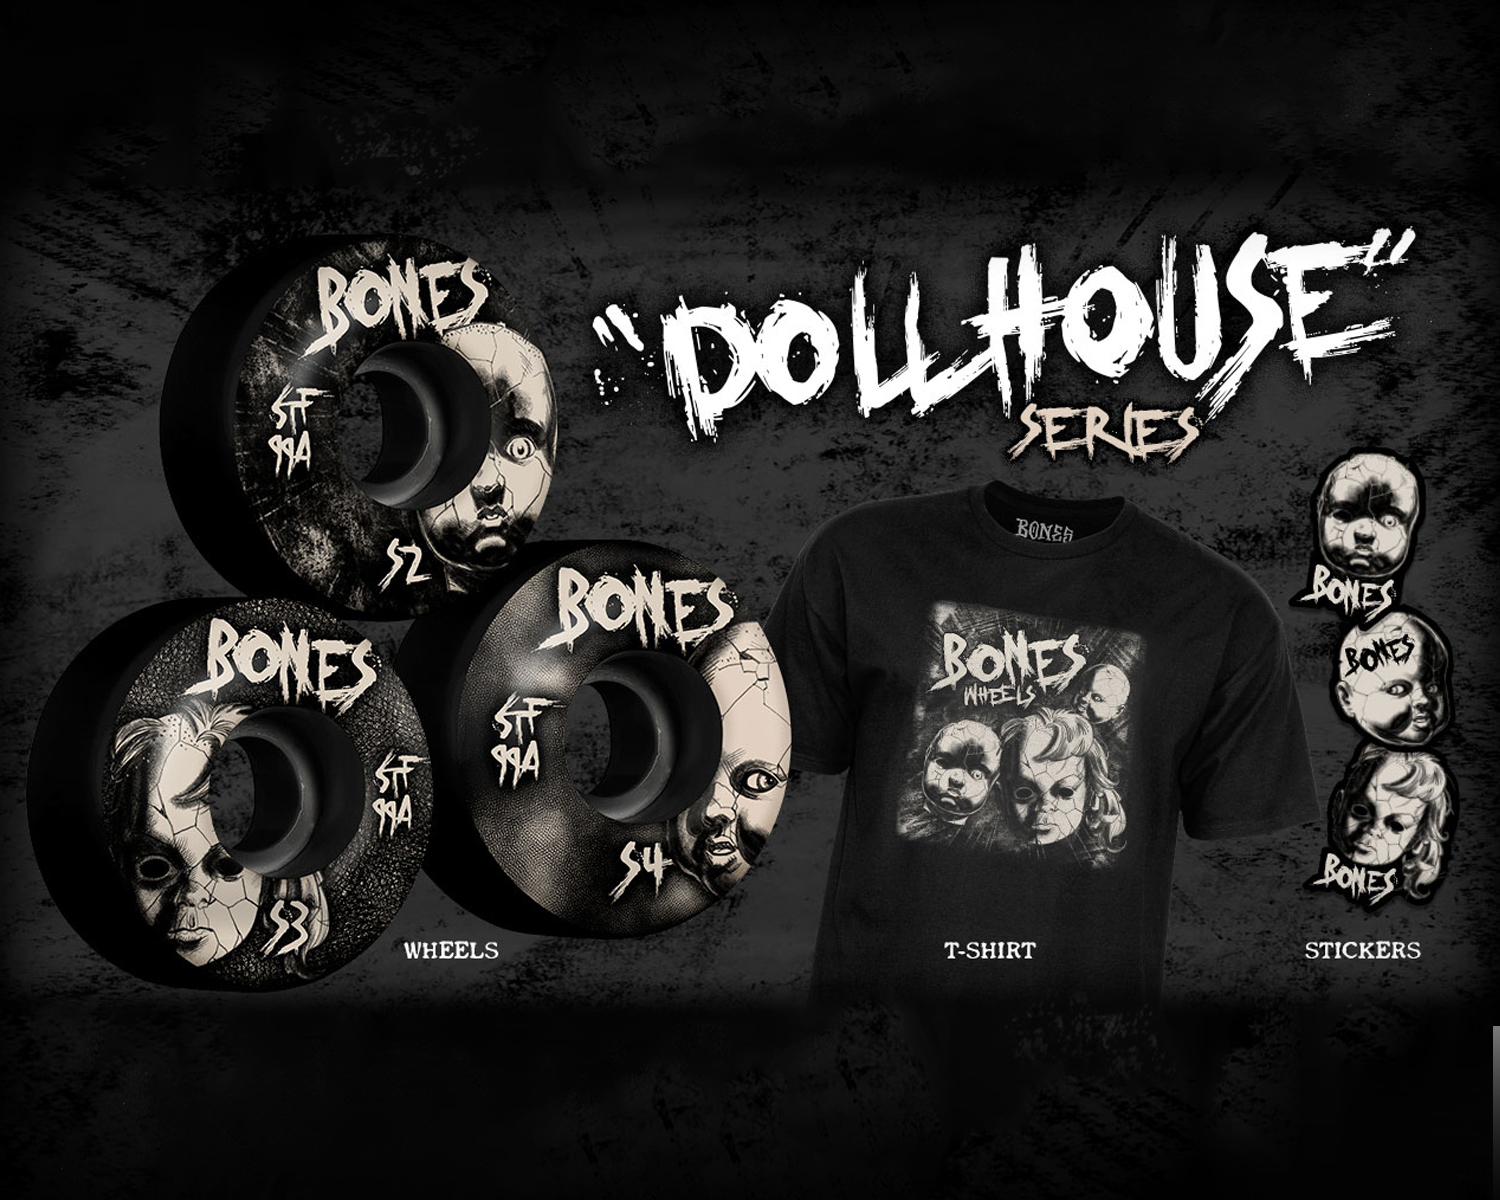 Bones' Dollhouse Series